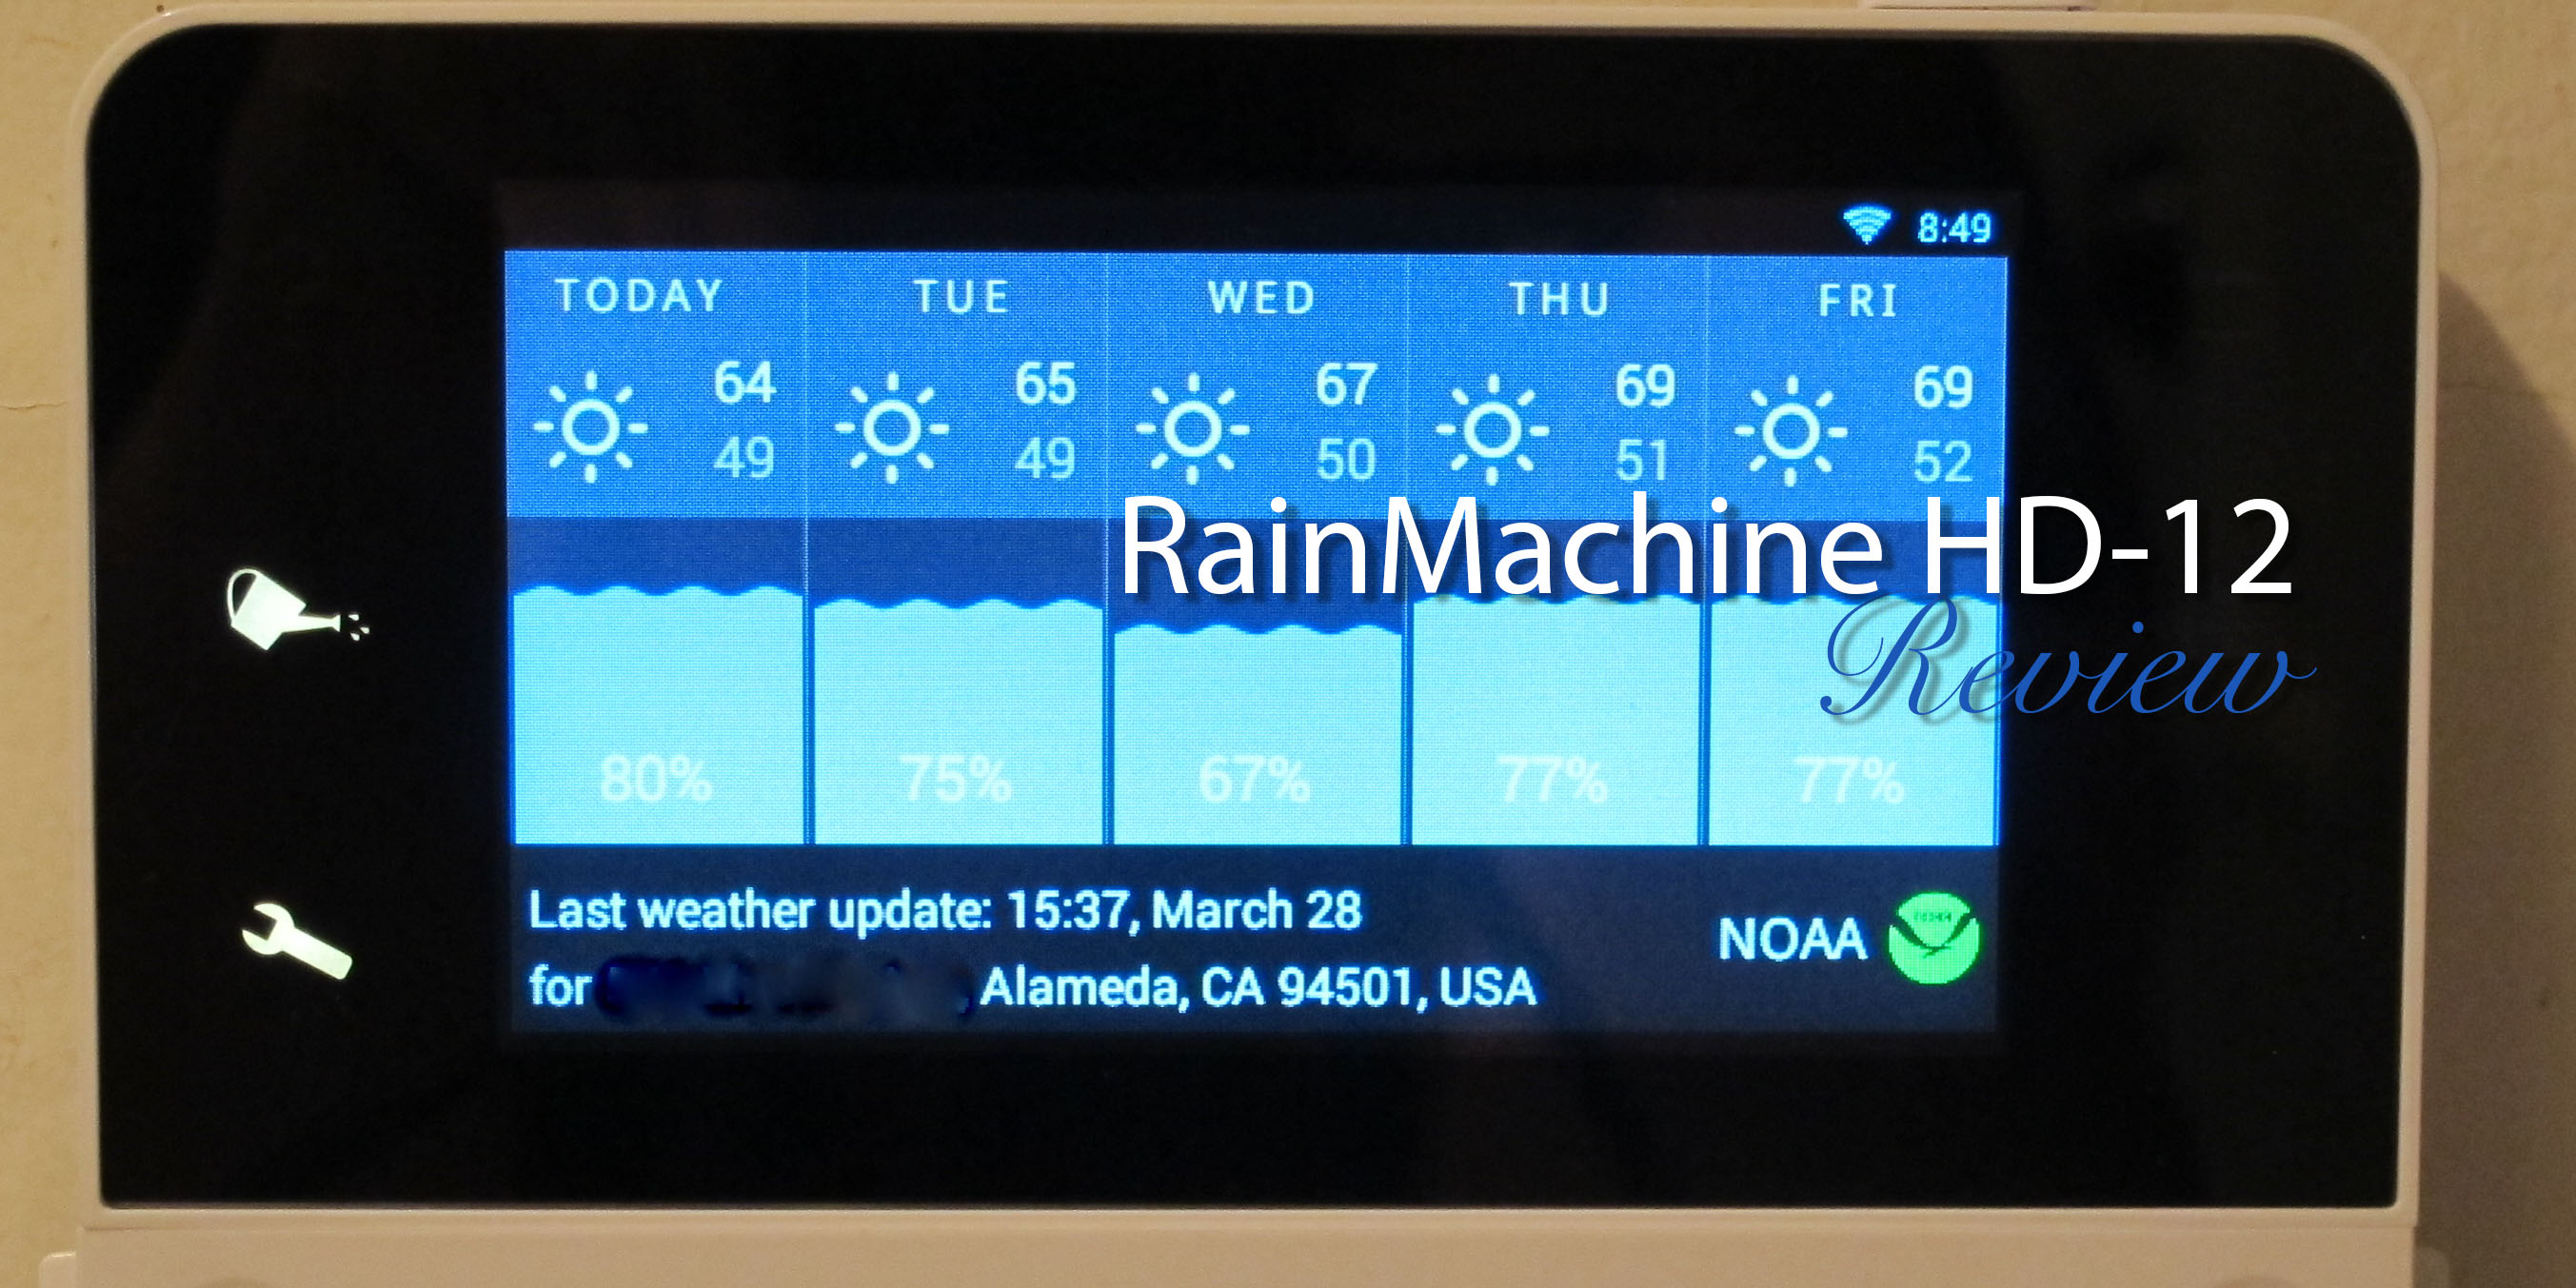 RainMachine HD-12 - The Forecast Sprinkler - Smart WiFi Irrigation Controller, 2nd Generation